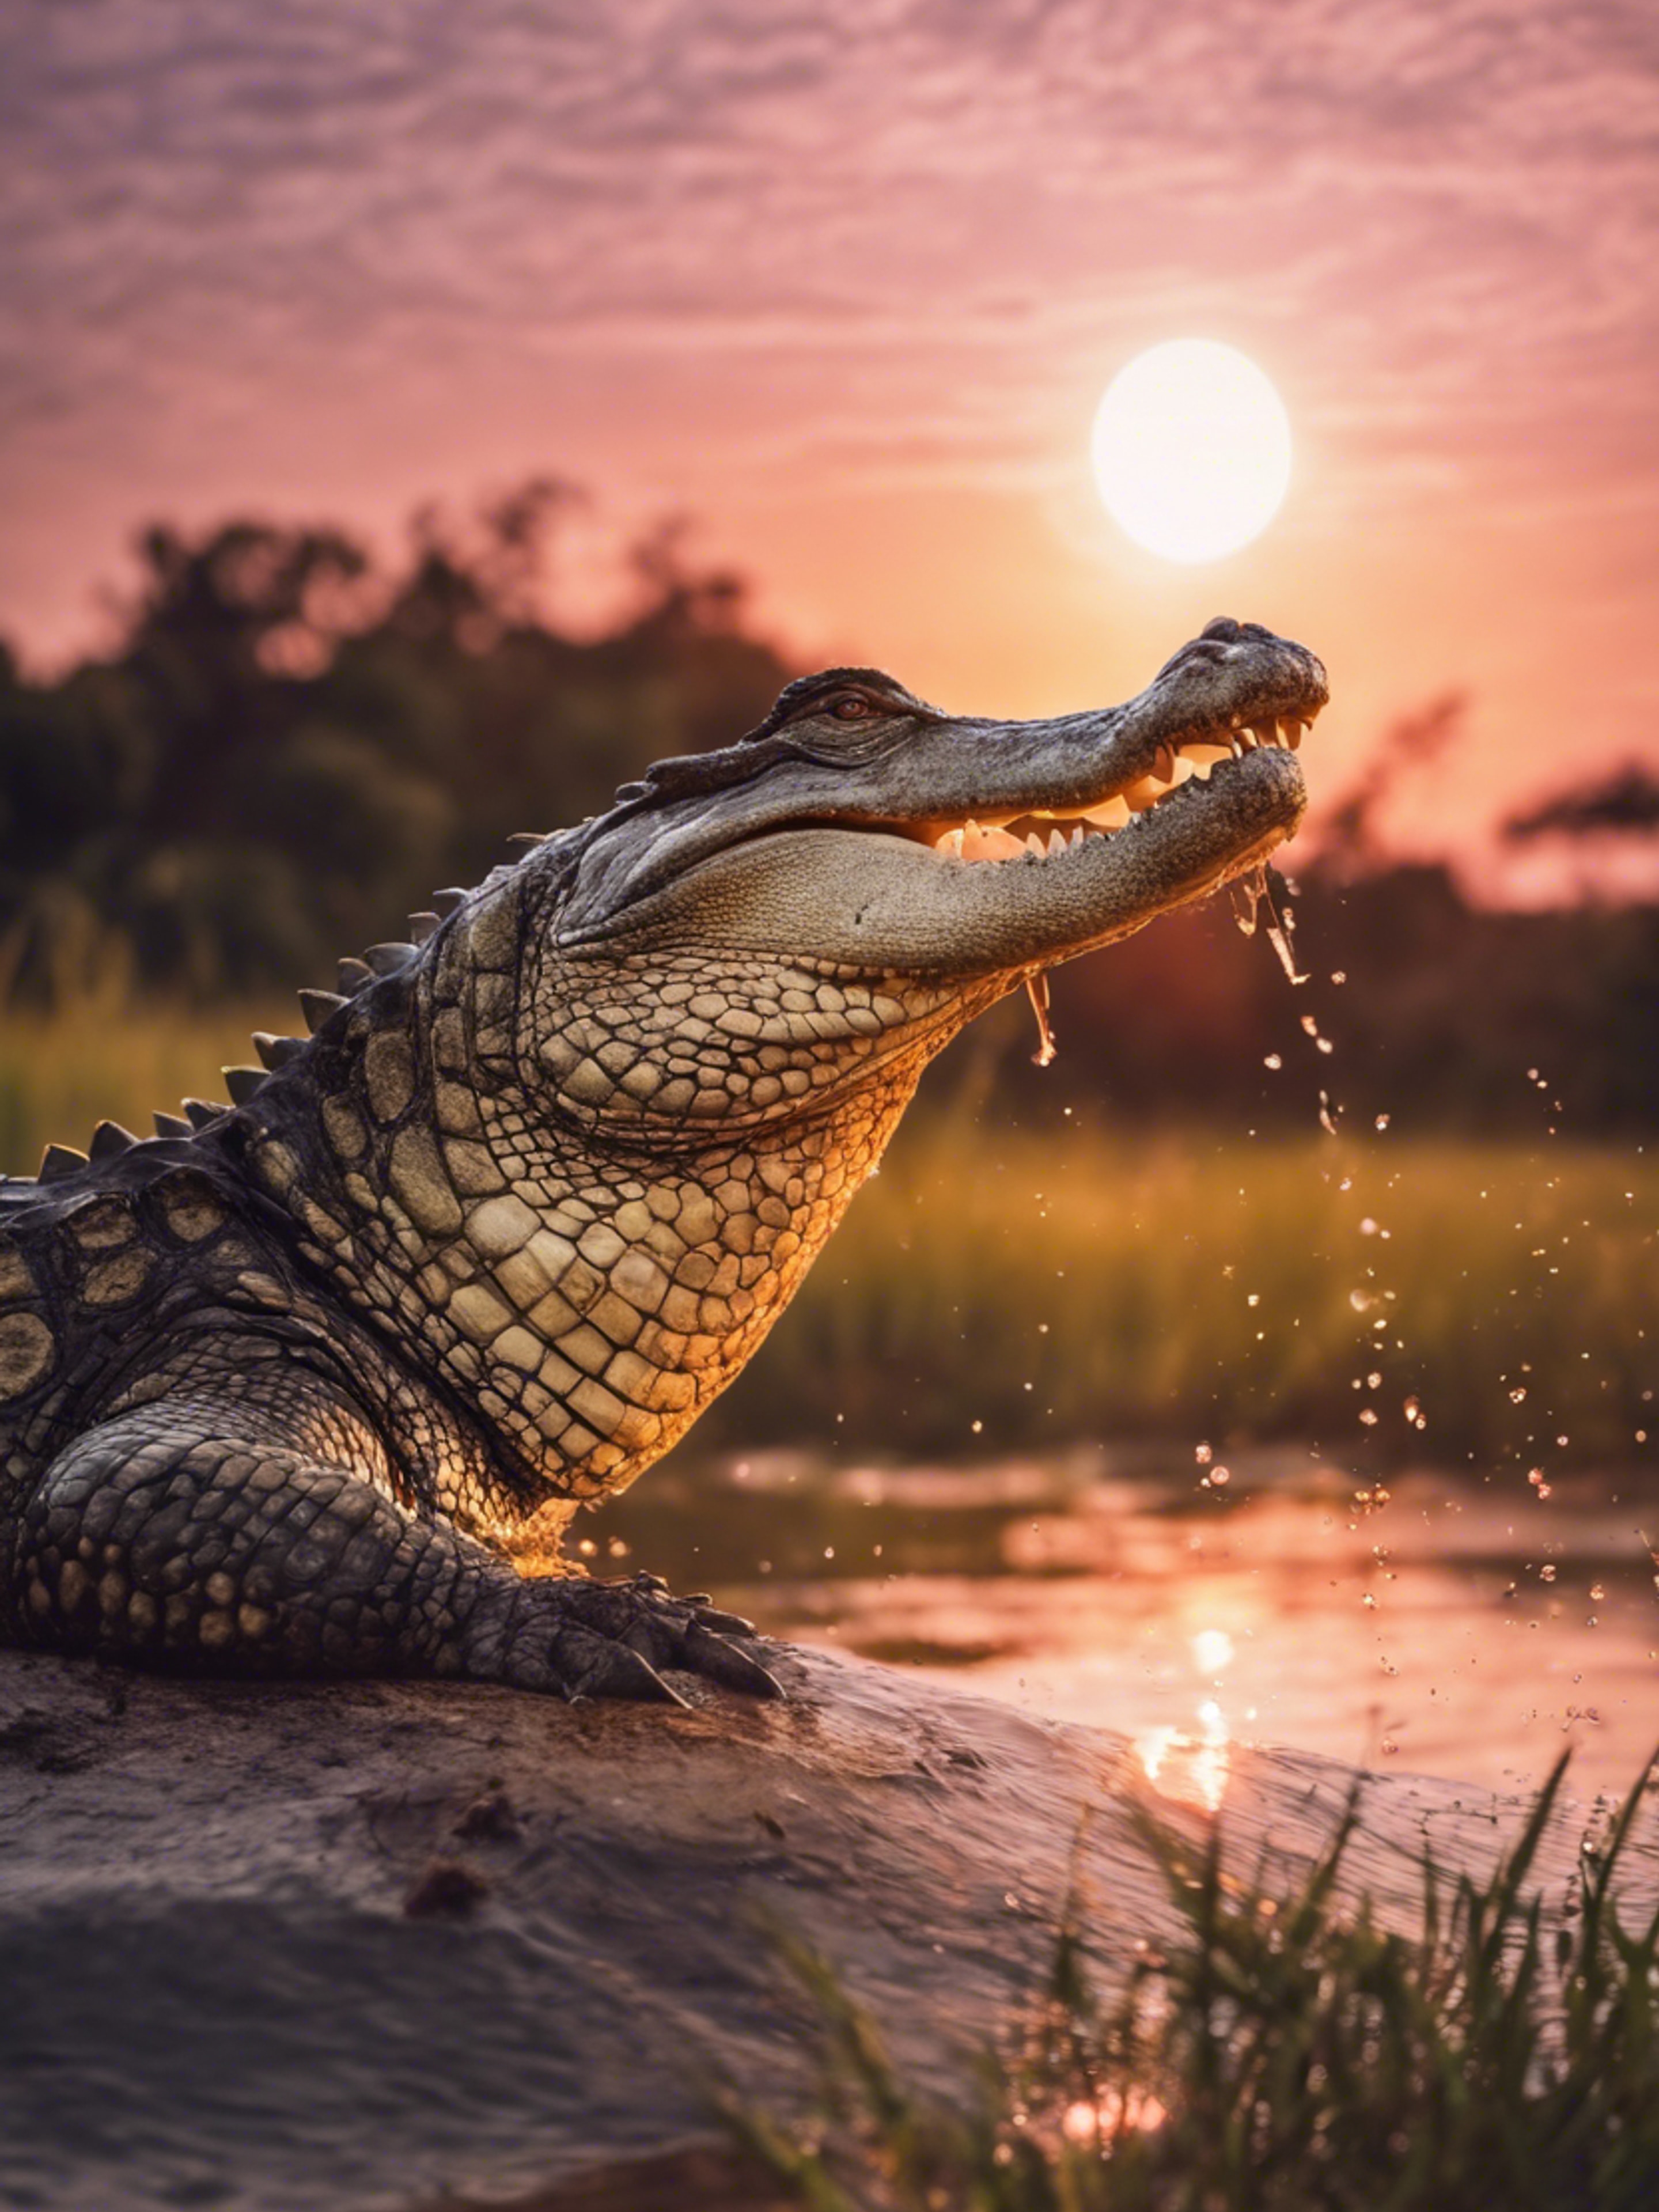 A beautiful sunrise with a crocodile breaking the surface under a rosy sky. Wallpaper[8e947b6adb0246b9980f]